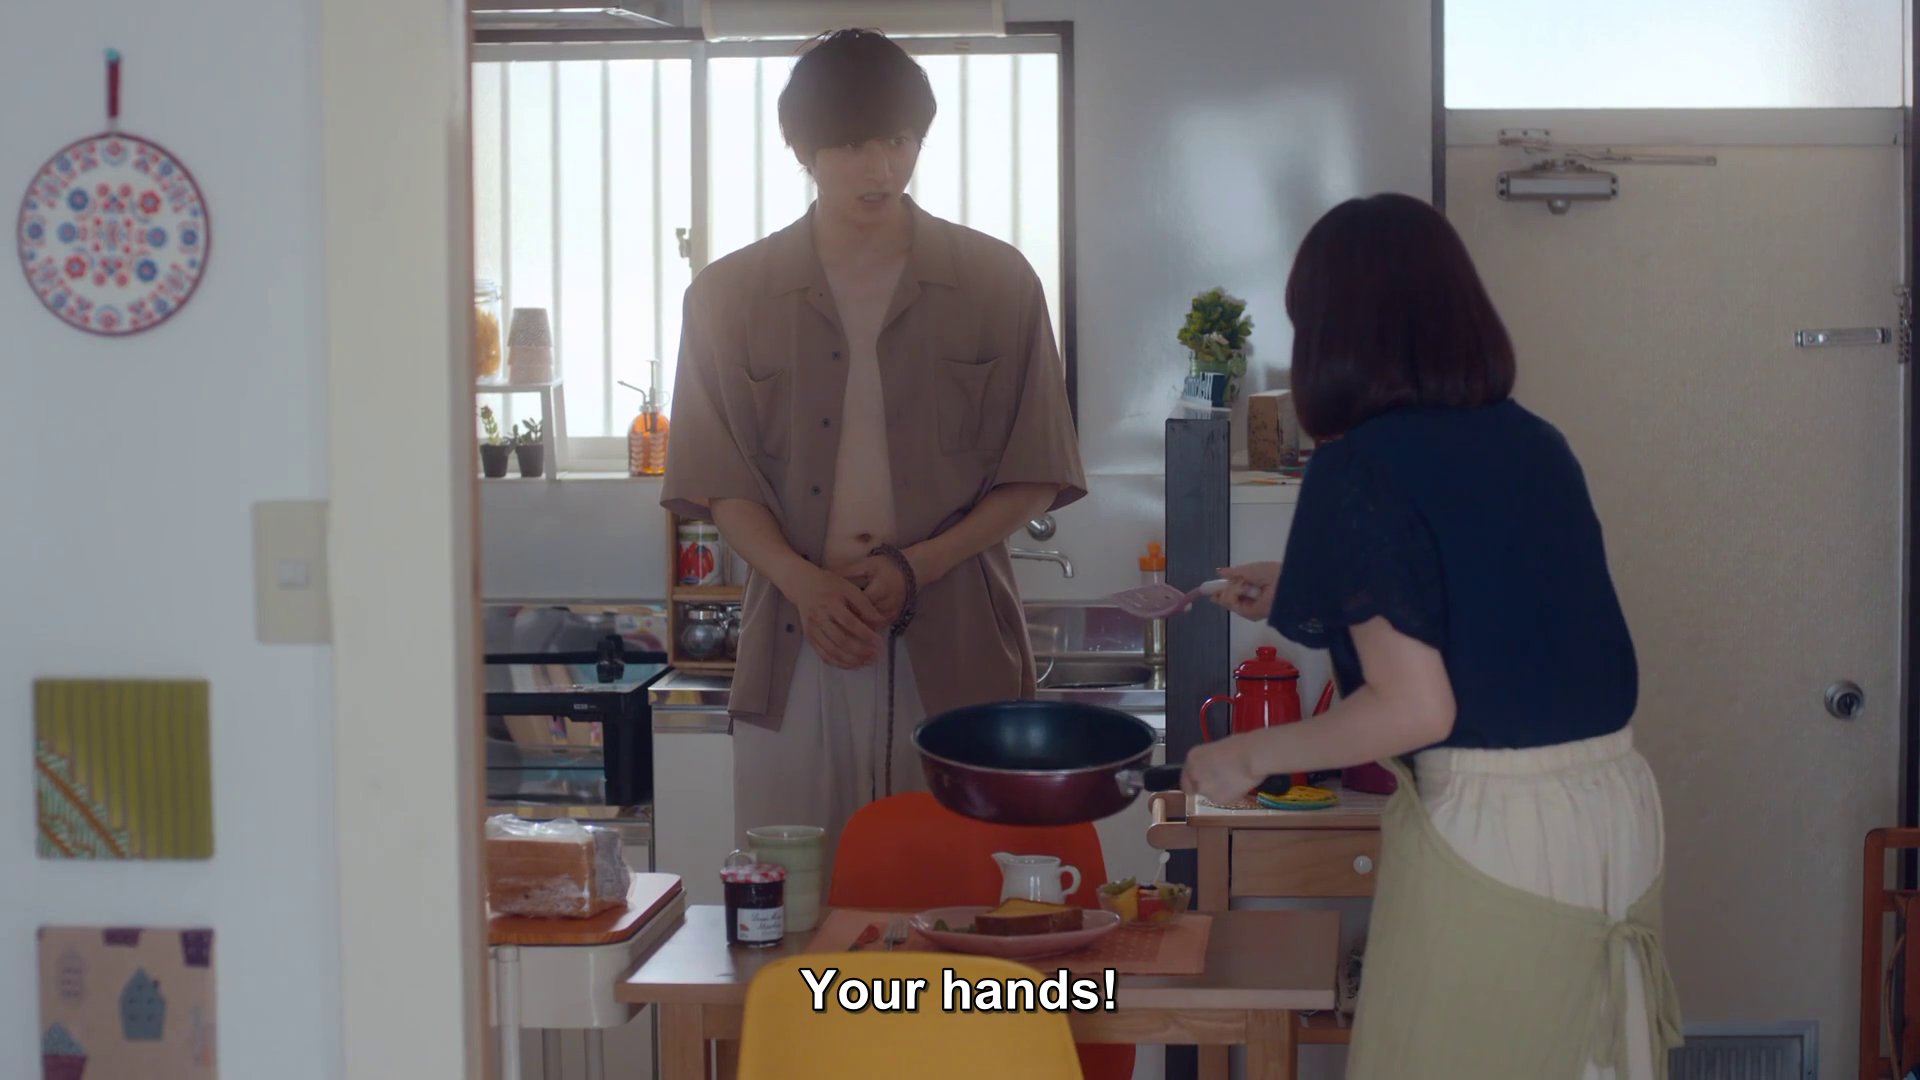 Matsuda and Ako having breakfast, Matsuda's hands untied.  Ako: Your hands!